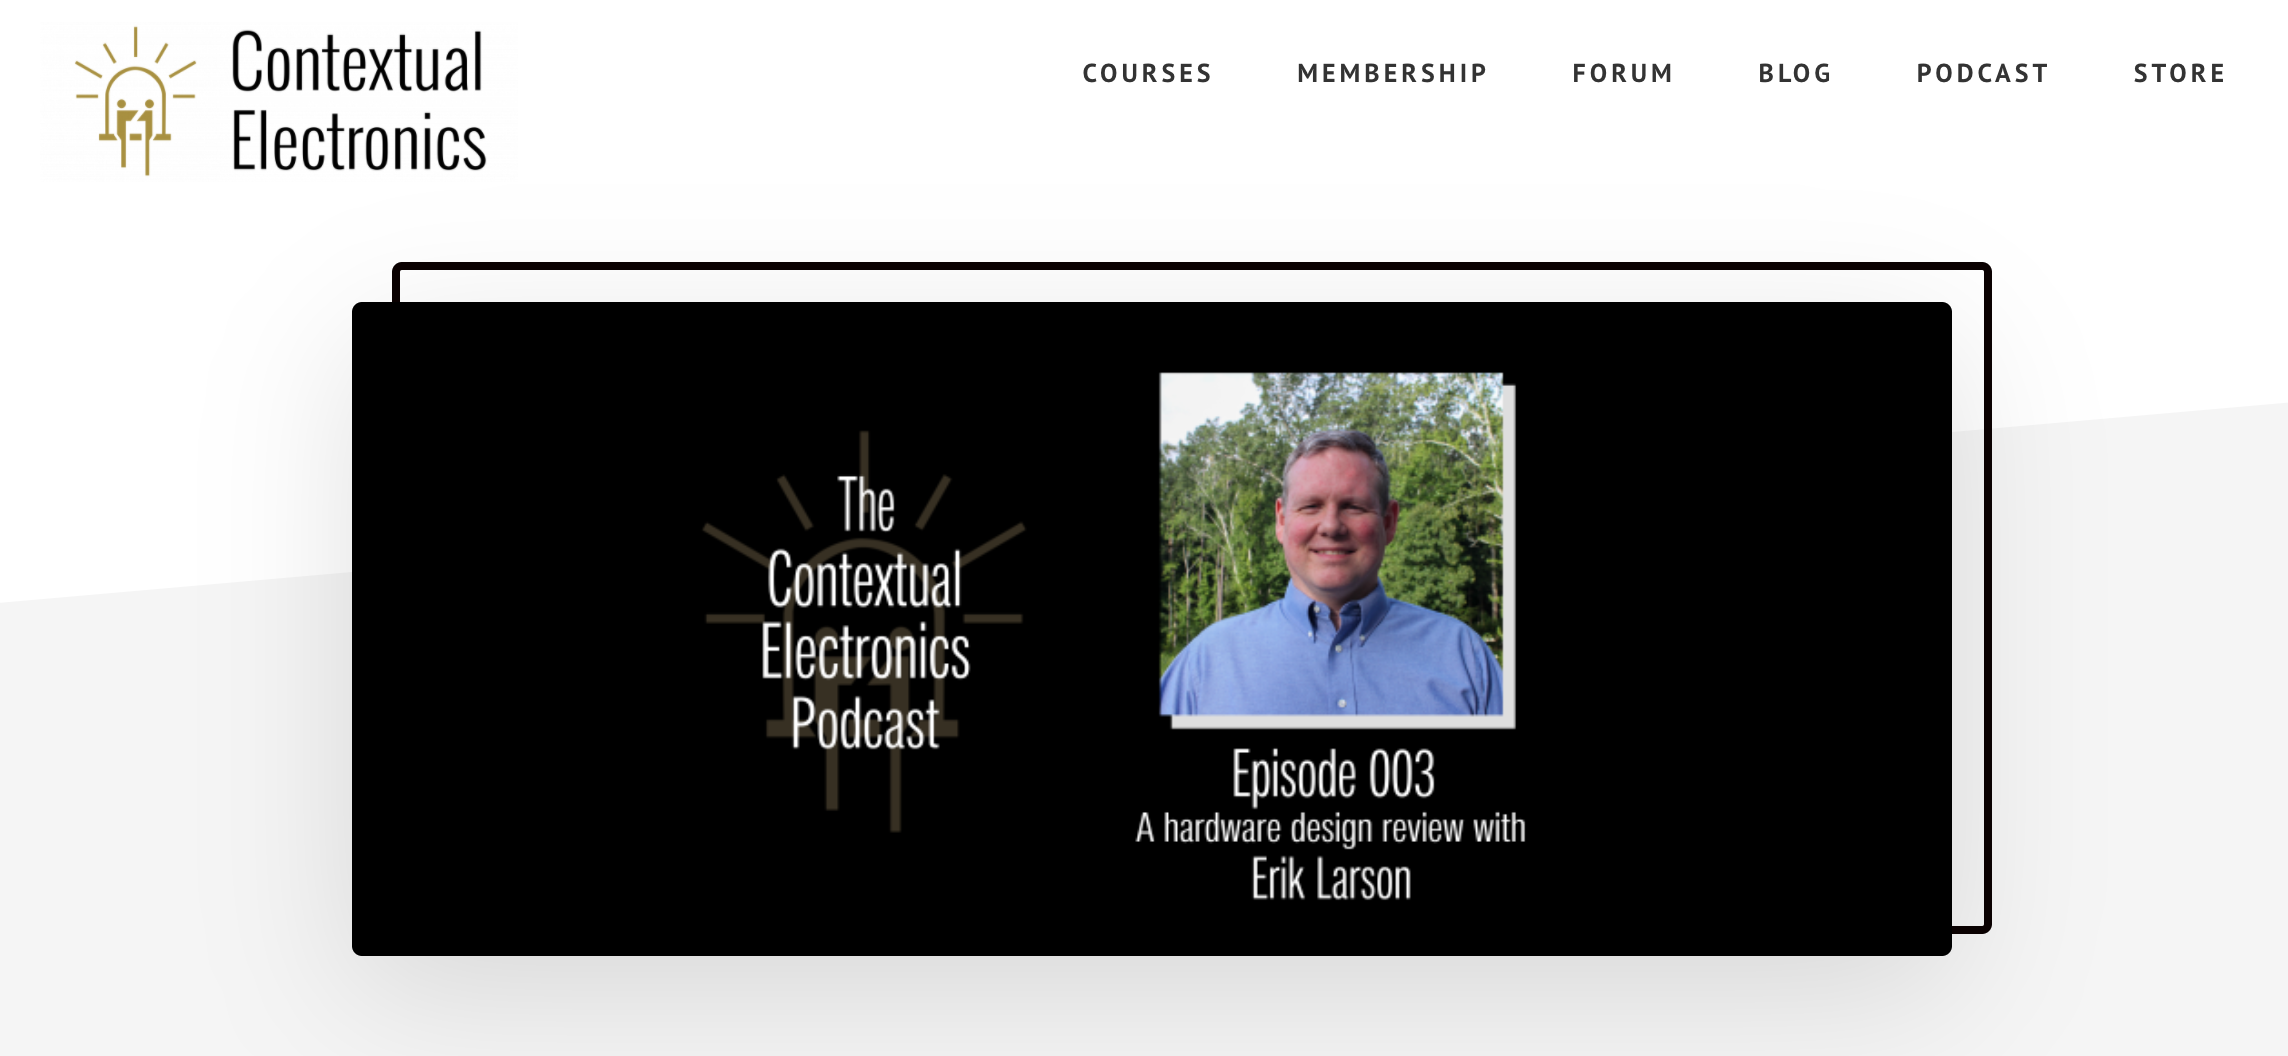 Contextual Electronics Podcast